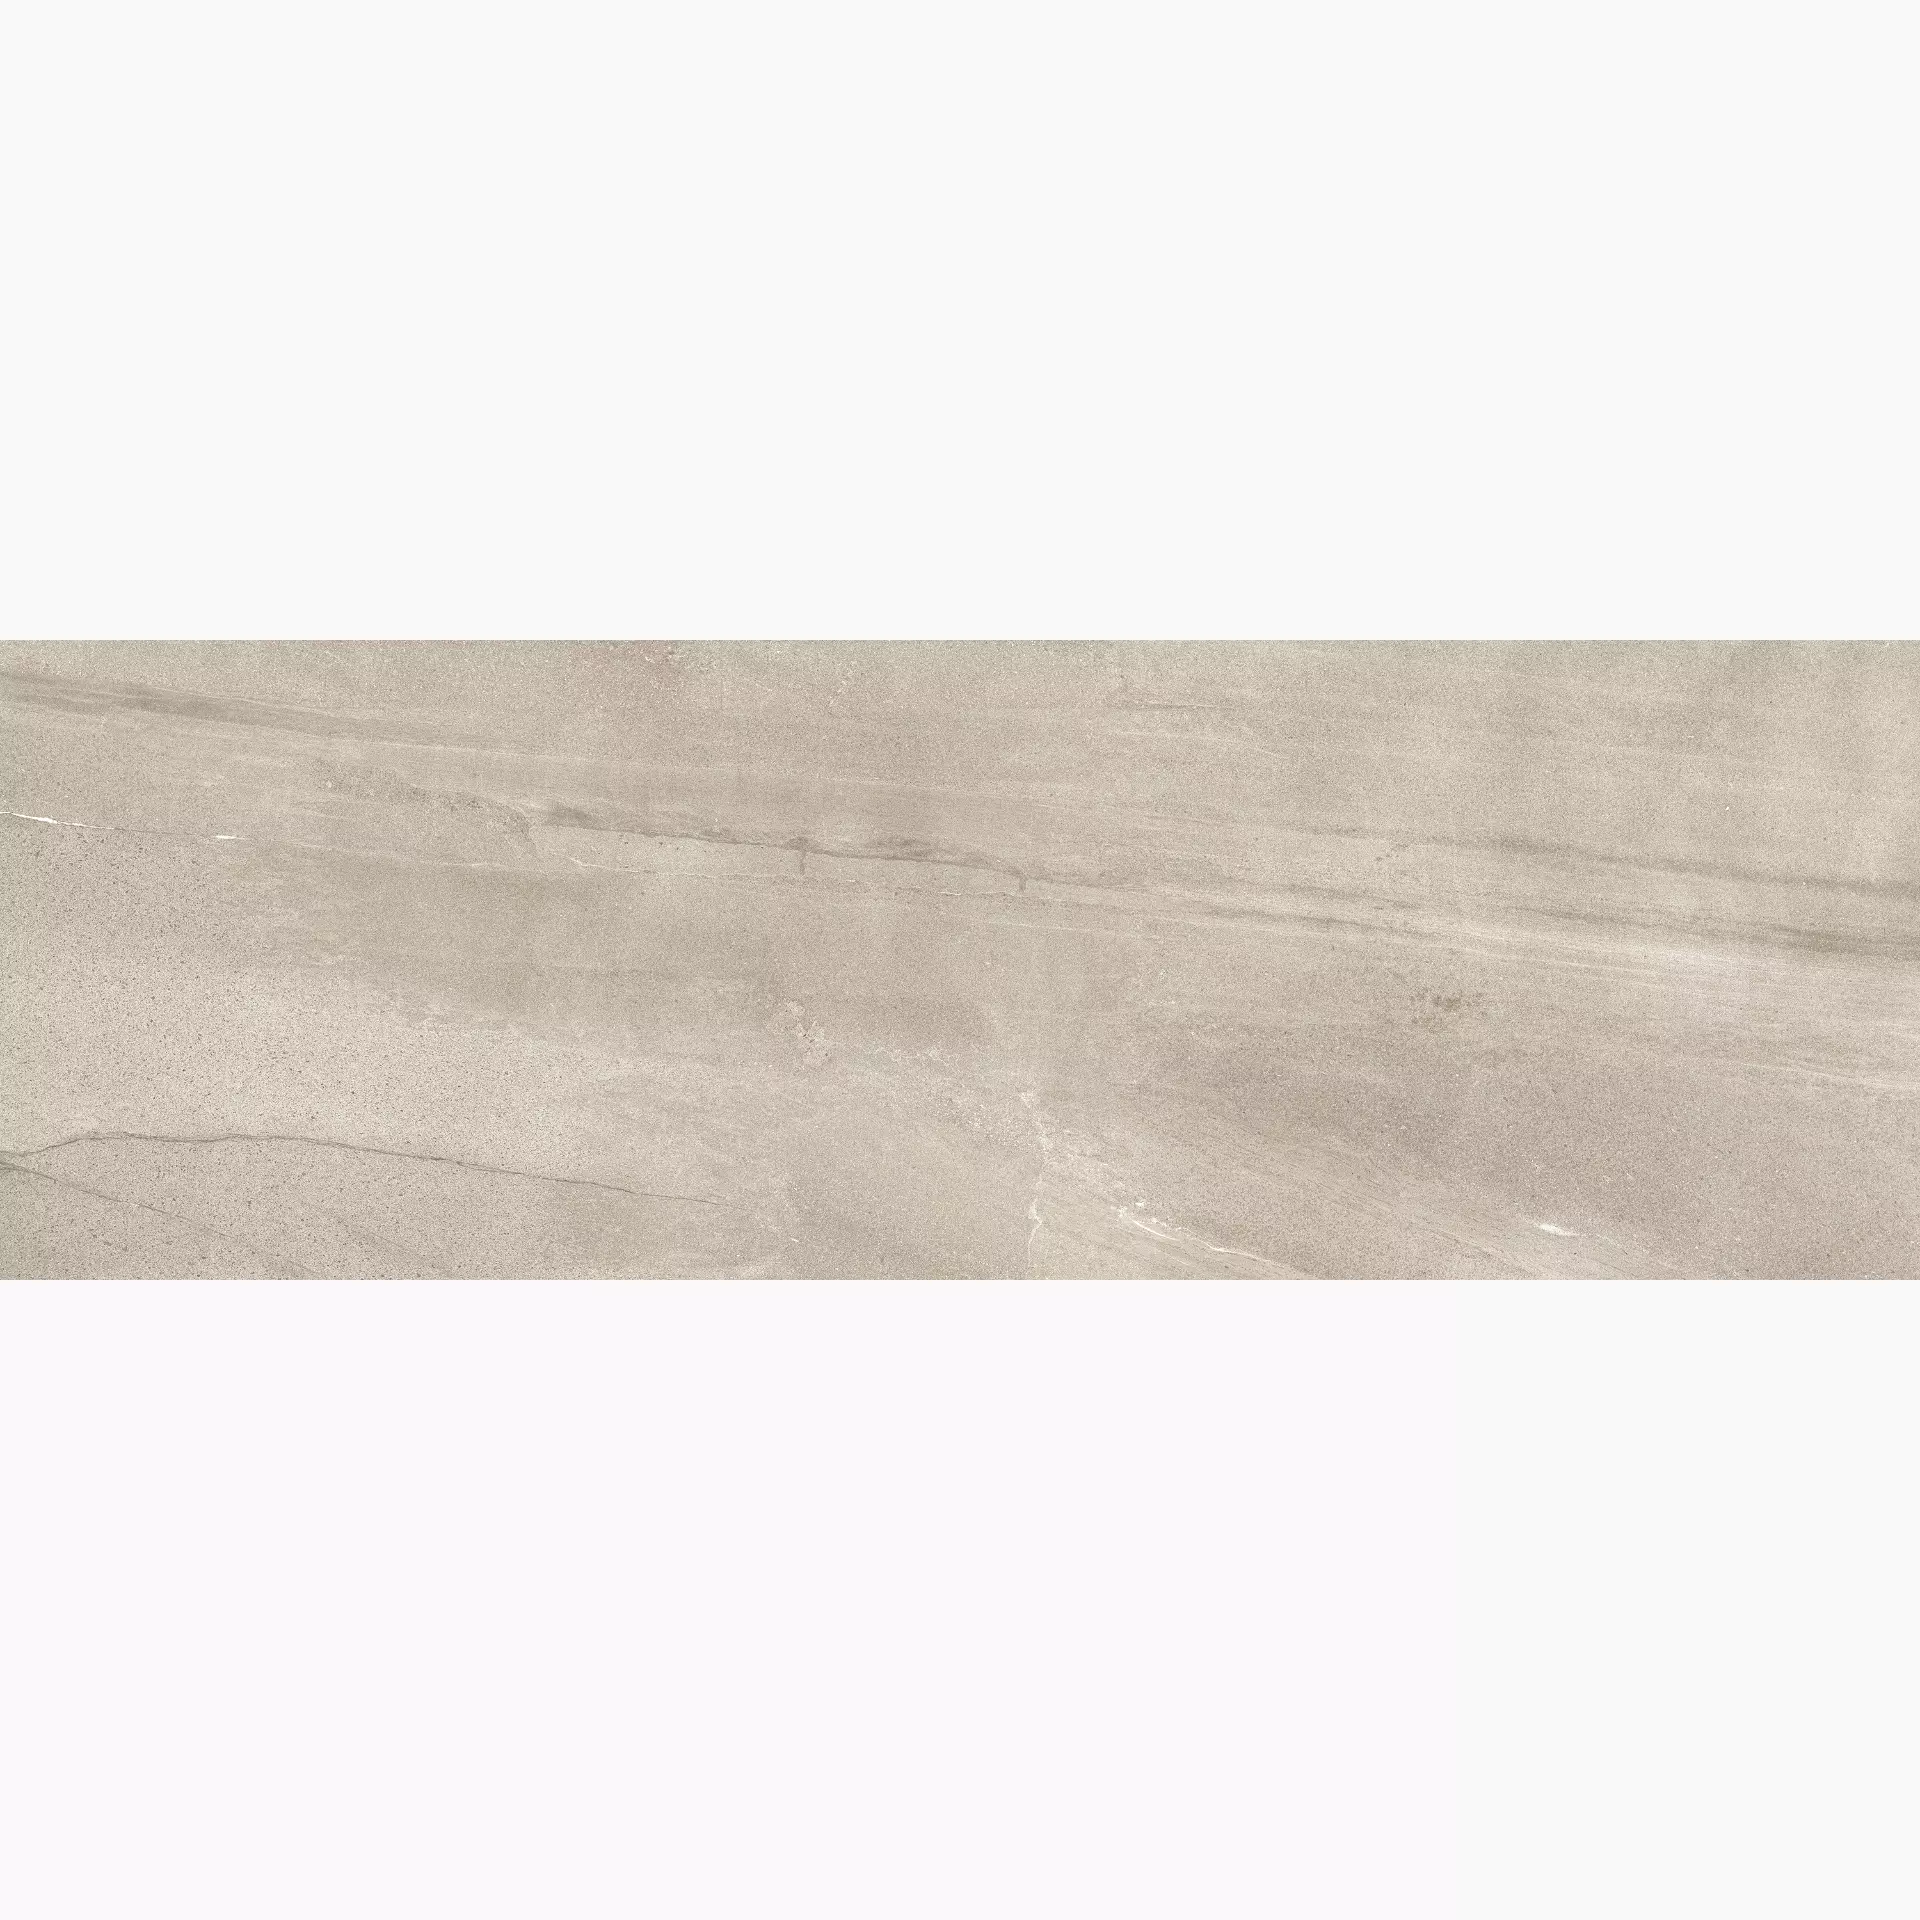 Ariostea Ultra Pietre Basaltina Sand Prelucidato UP6P310445 100x300cm rectified 6mm